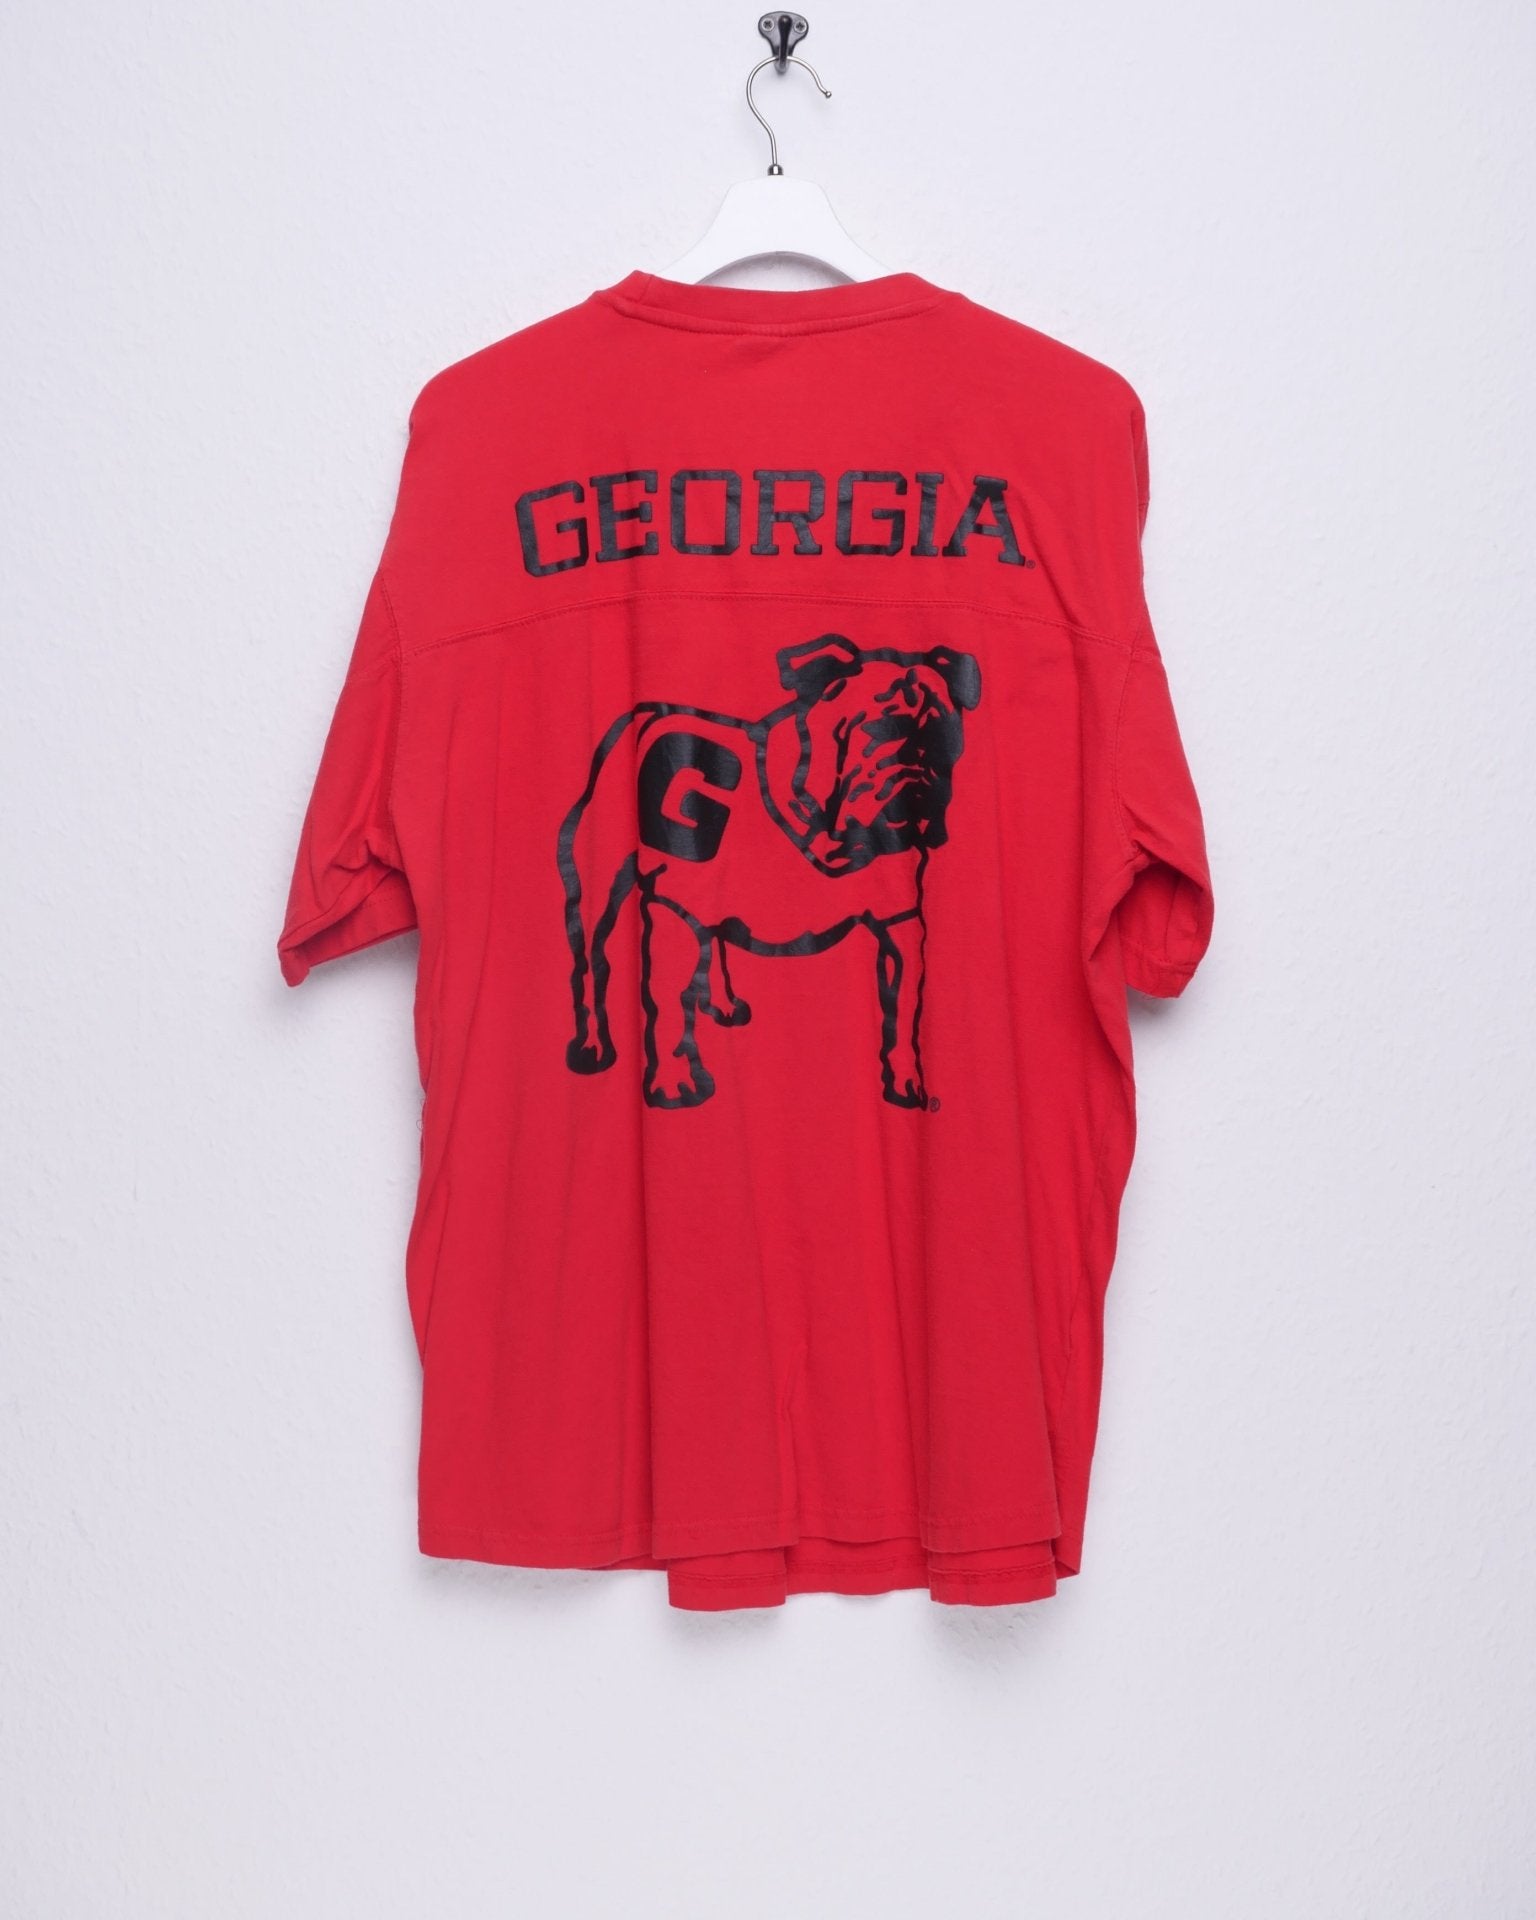 'Georgia Bulldogs' printed Logo red Shirt - Peeces